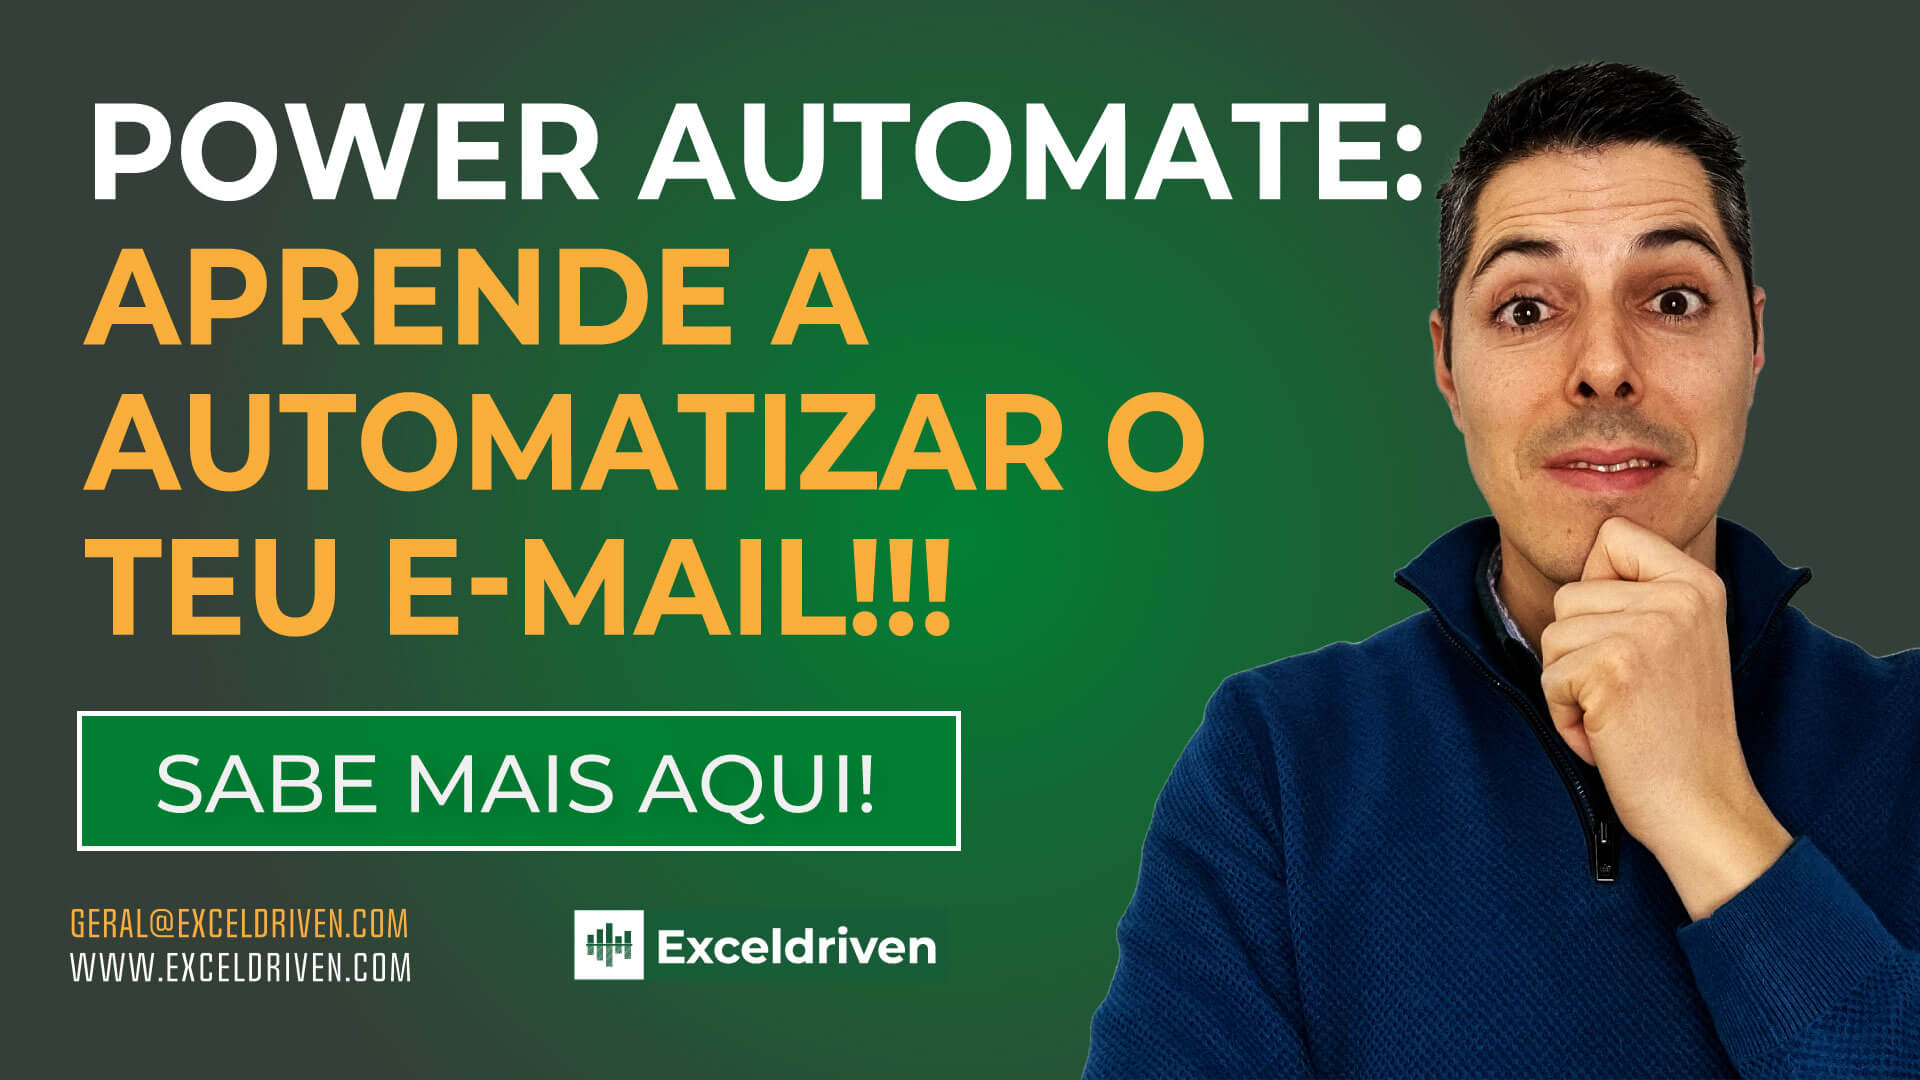 Power Automate: Aprende a automatizar o teu e-mail!!!